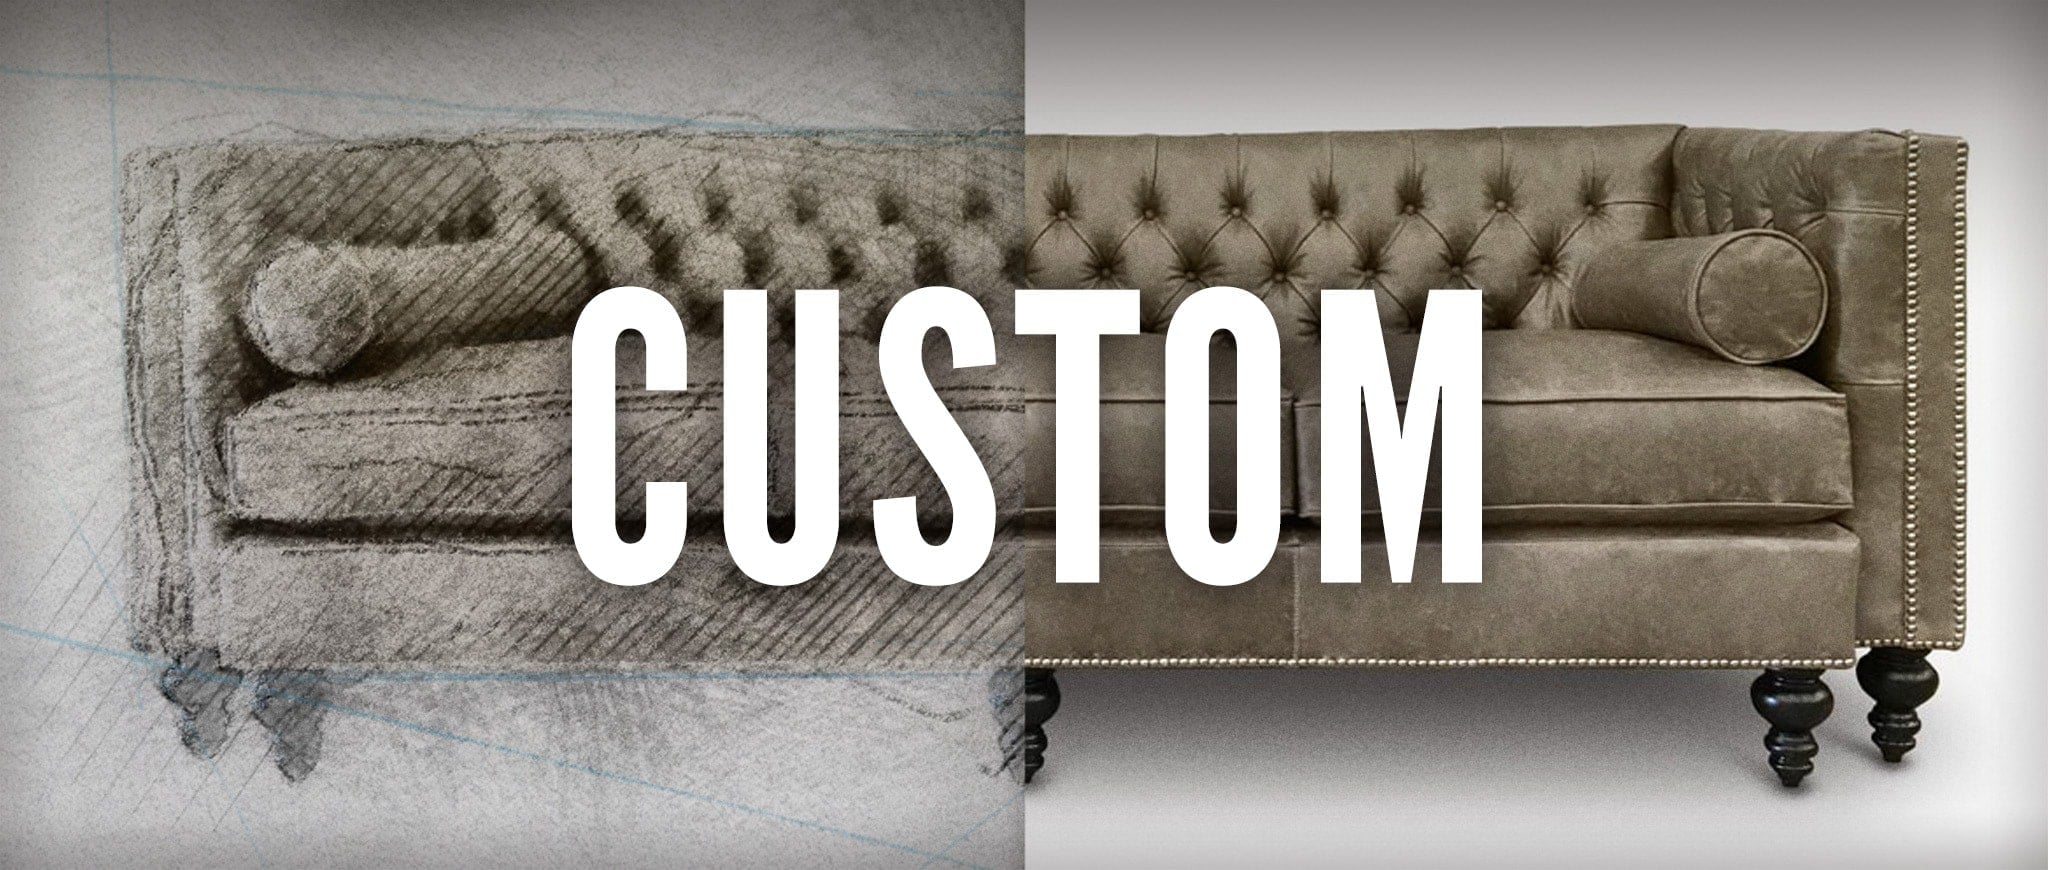 Custom Furniture Options by of Iron & Oak